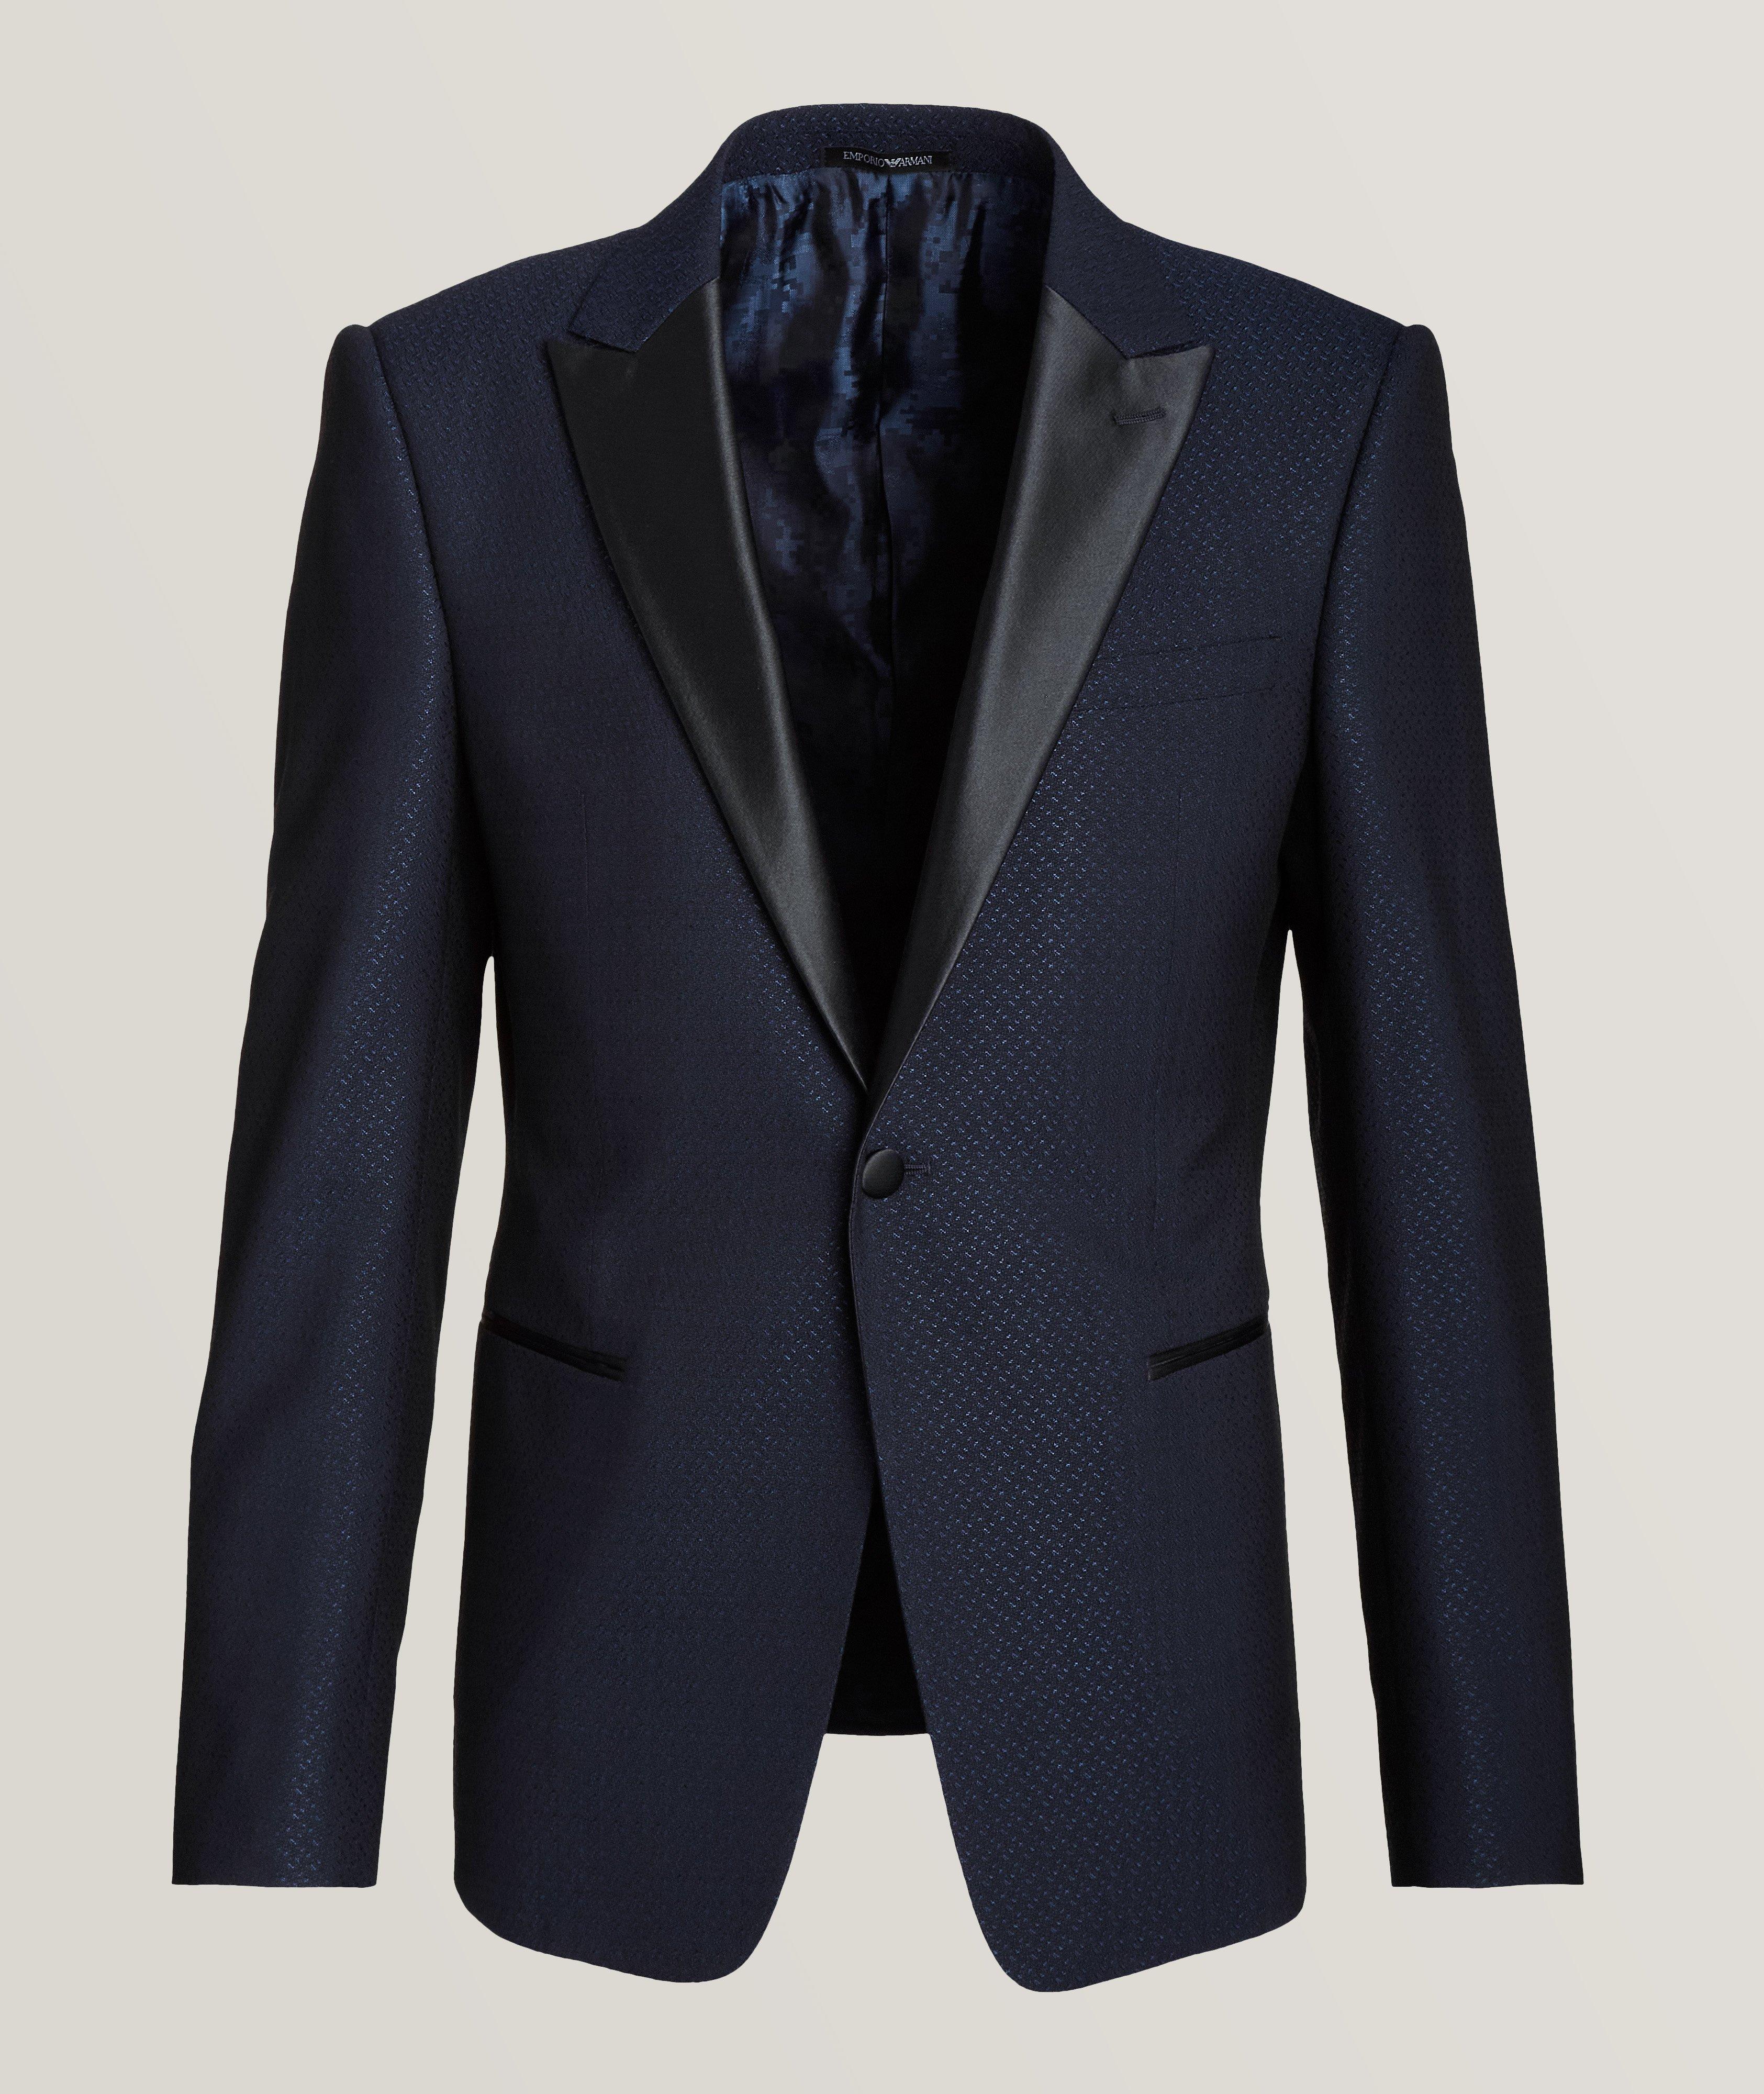 David Line Jacquard Wool-Silk Tuxedo Jacket